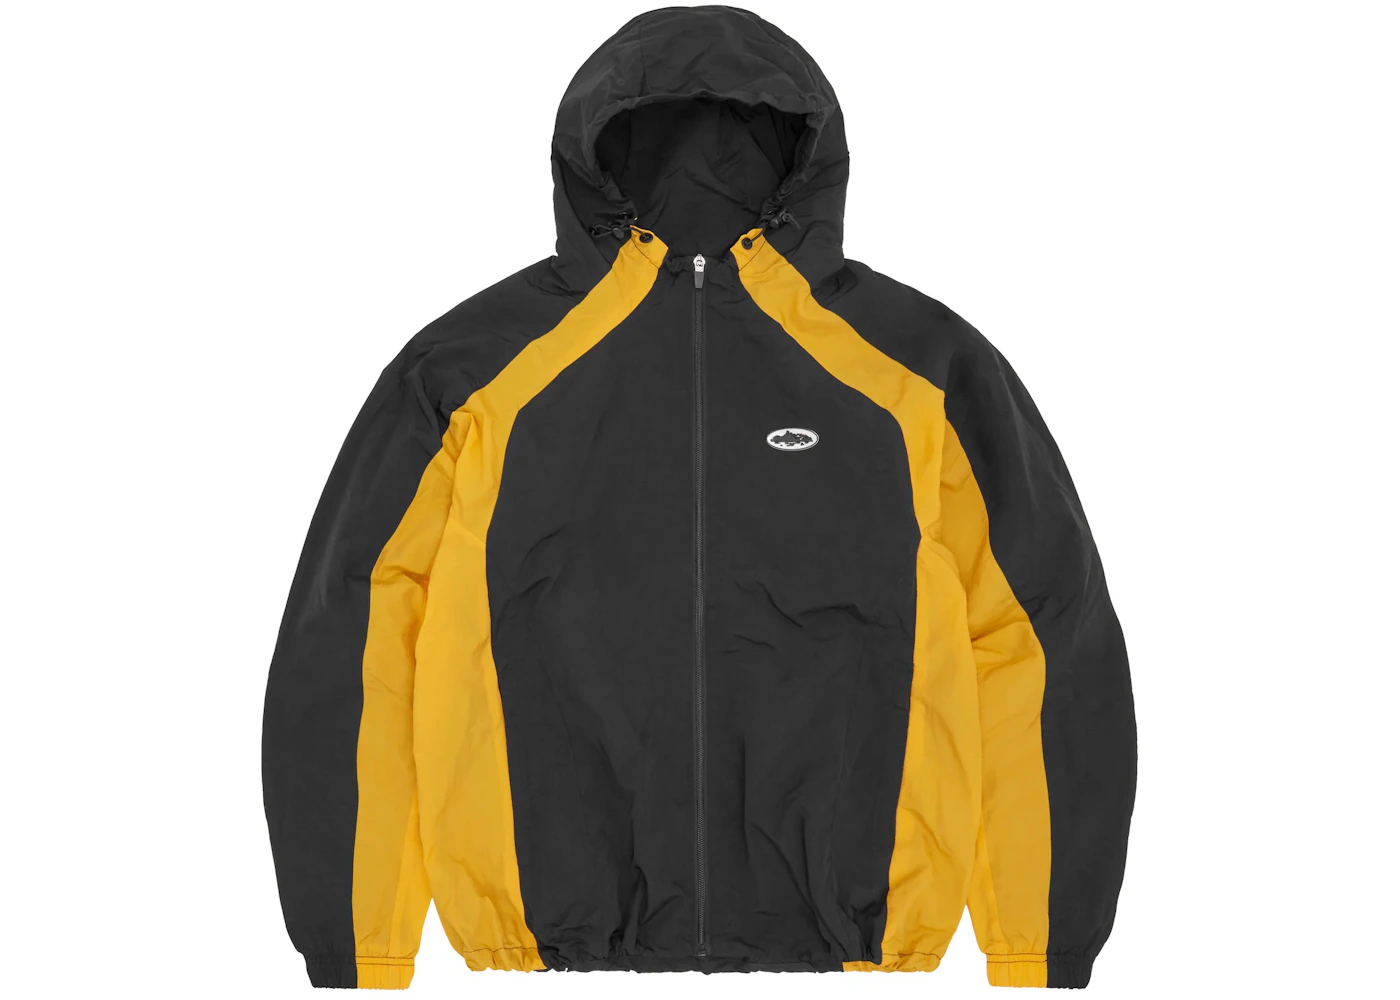 jacket yellow and black